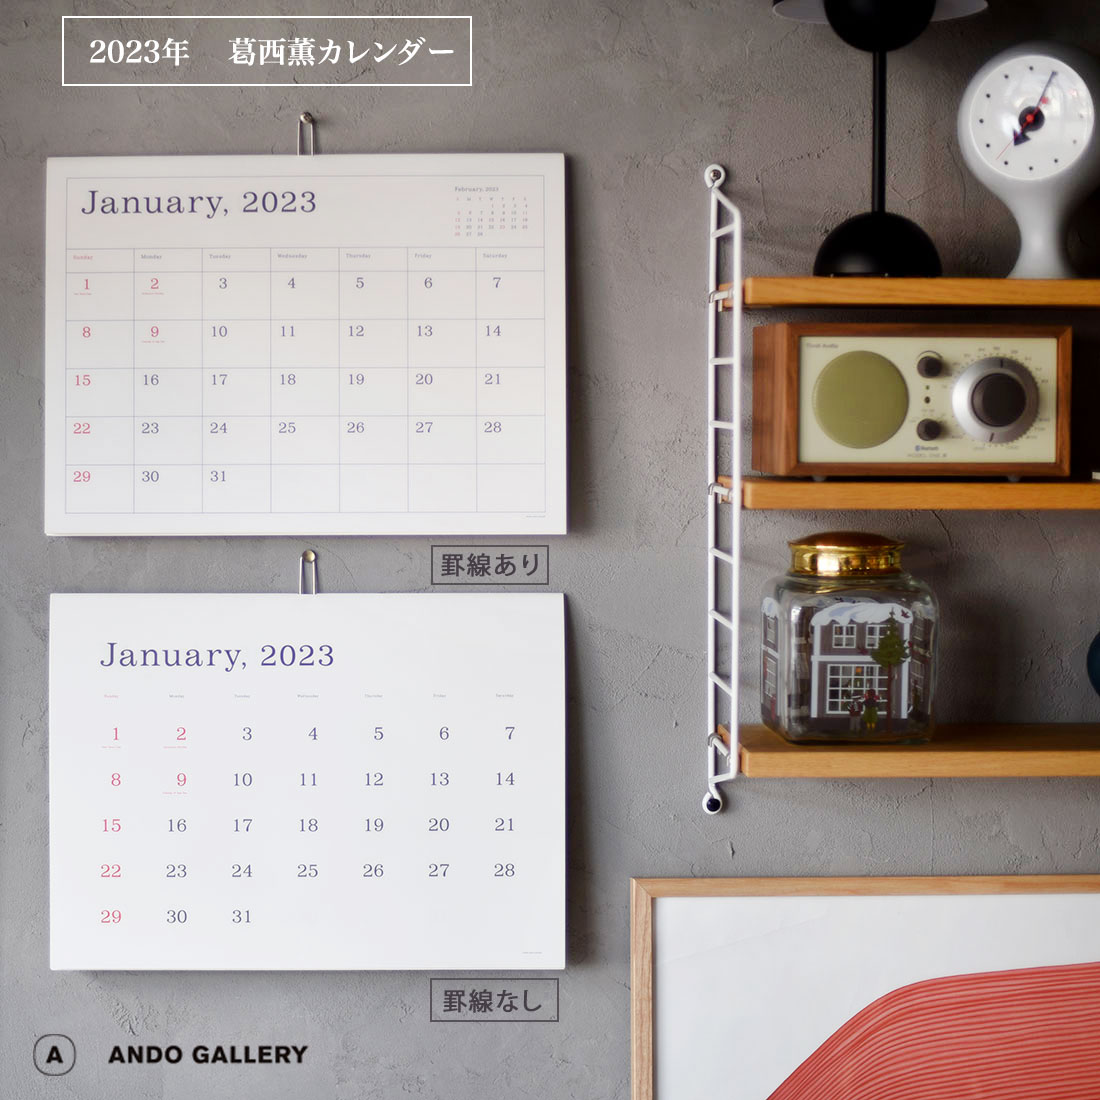 ANDO GALLERY 葛西薫 2023年カレンダー 単品 令和5年 壁掛け 罫線あり 罫線なし シンプル アンドーギャラリー KASAI Kaoru calendar 2023